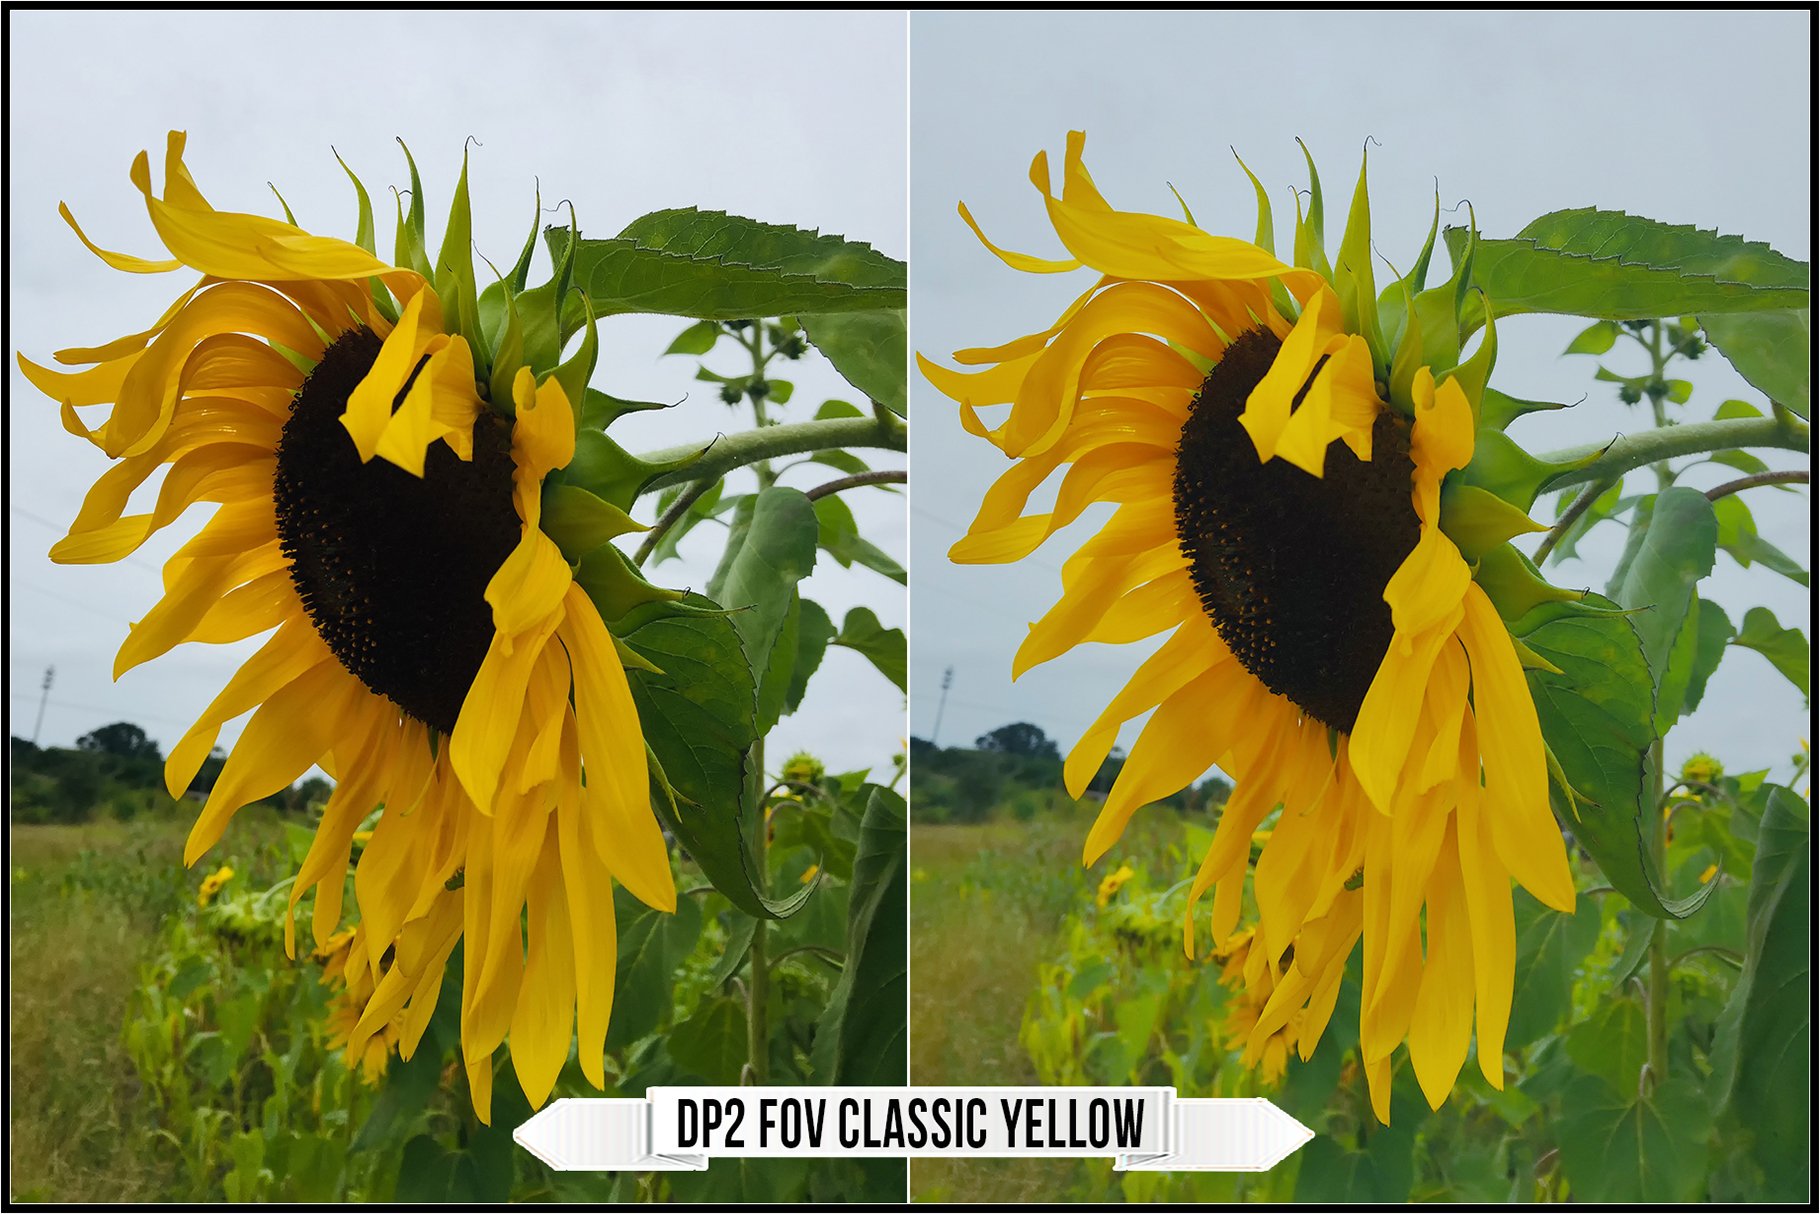 dp2 fov classic yellow 875